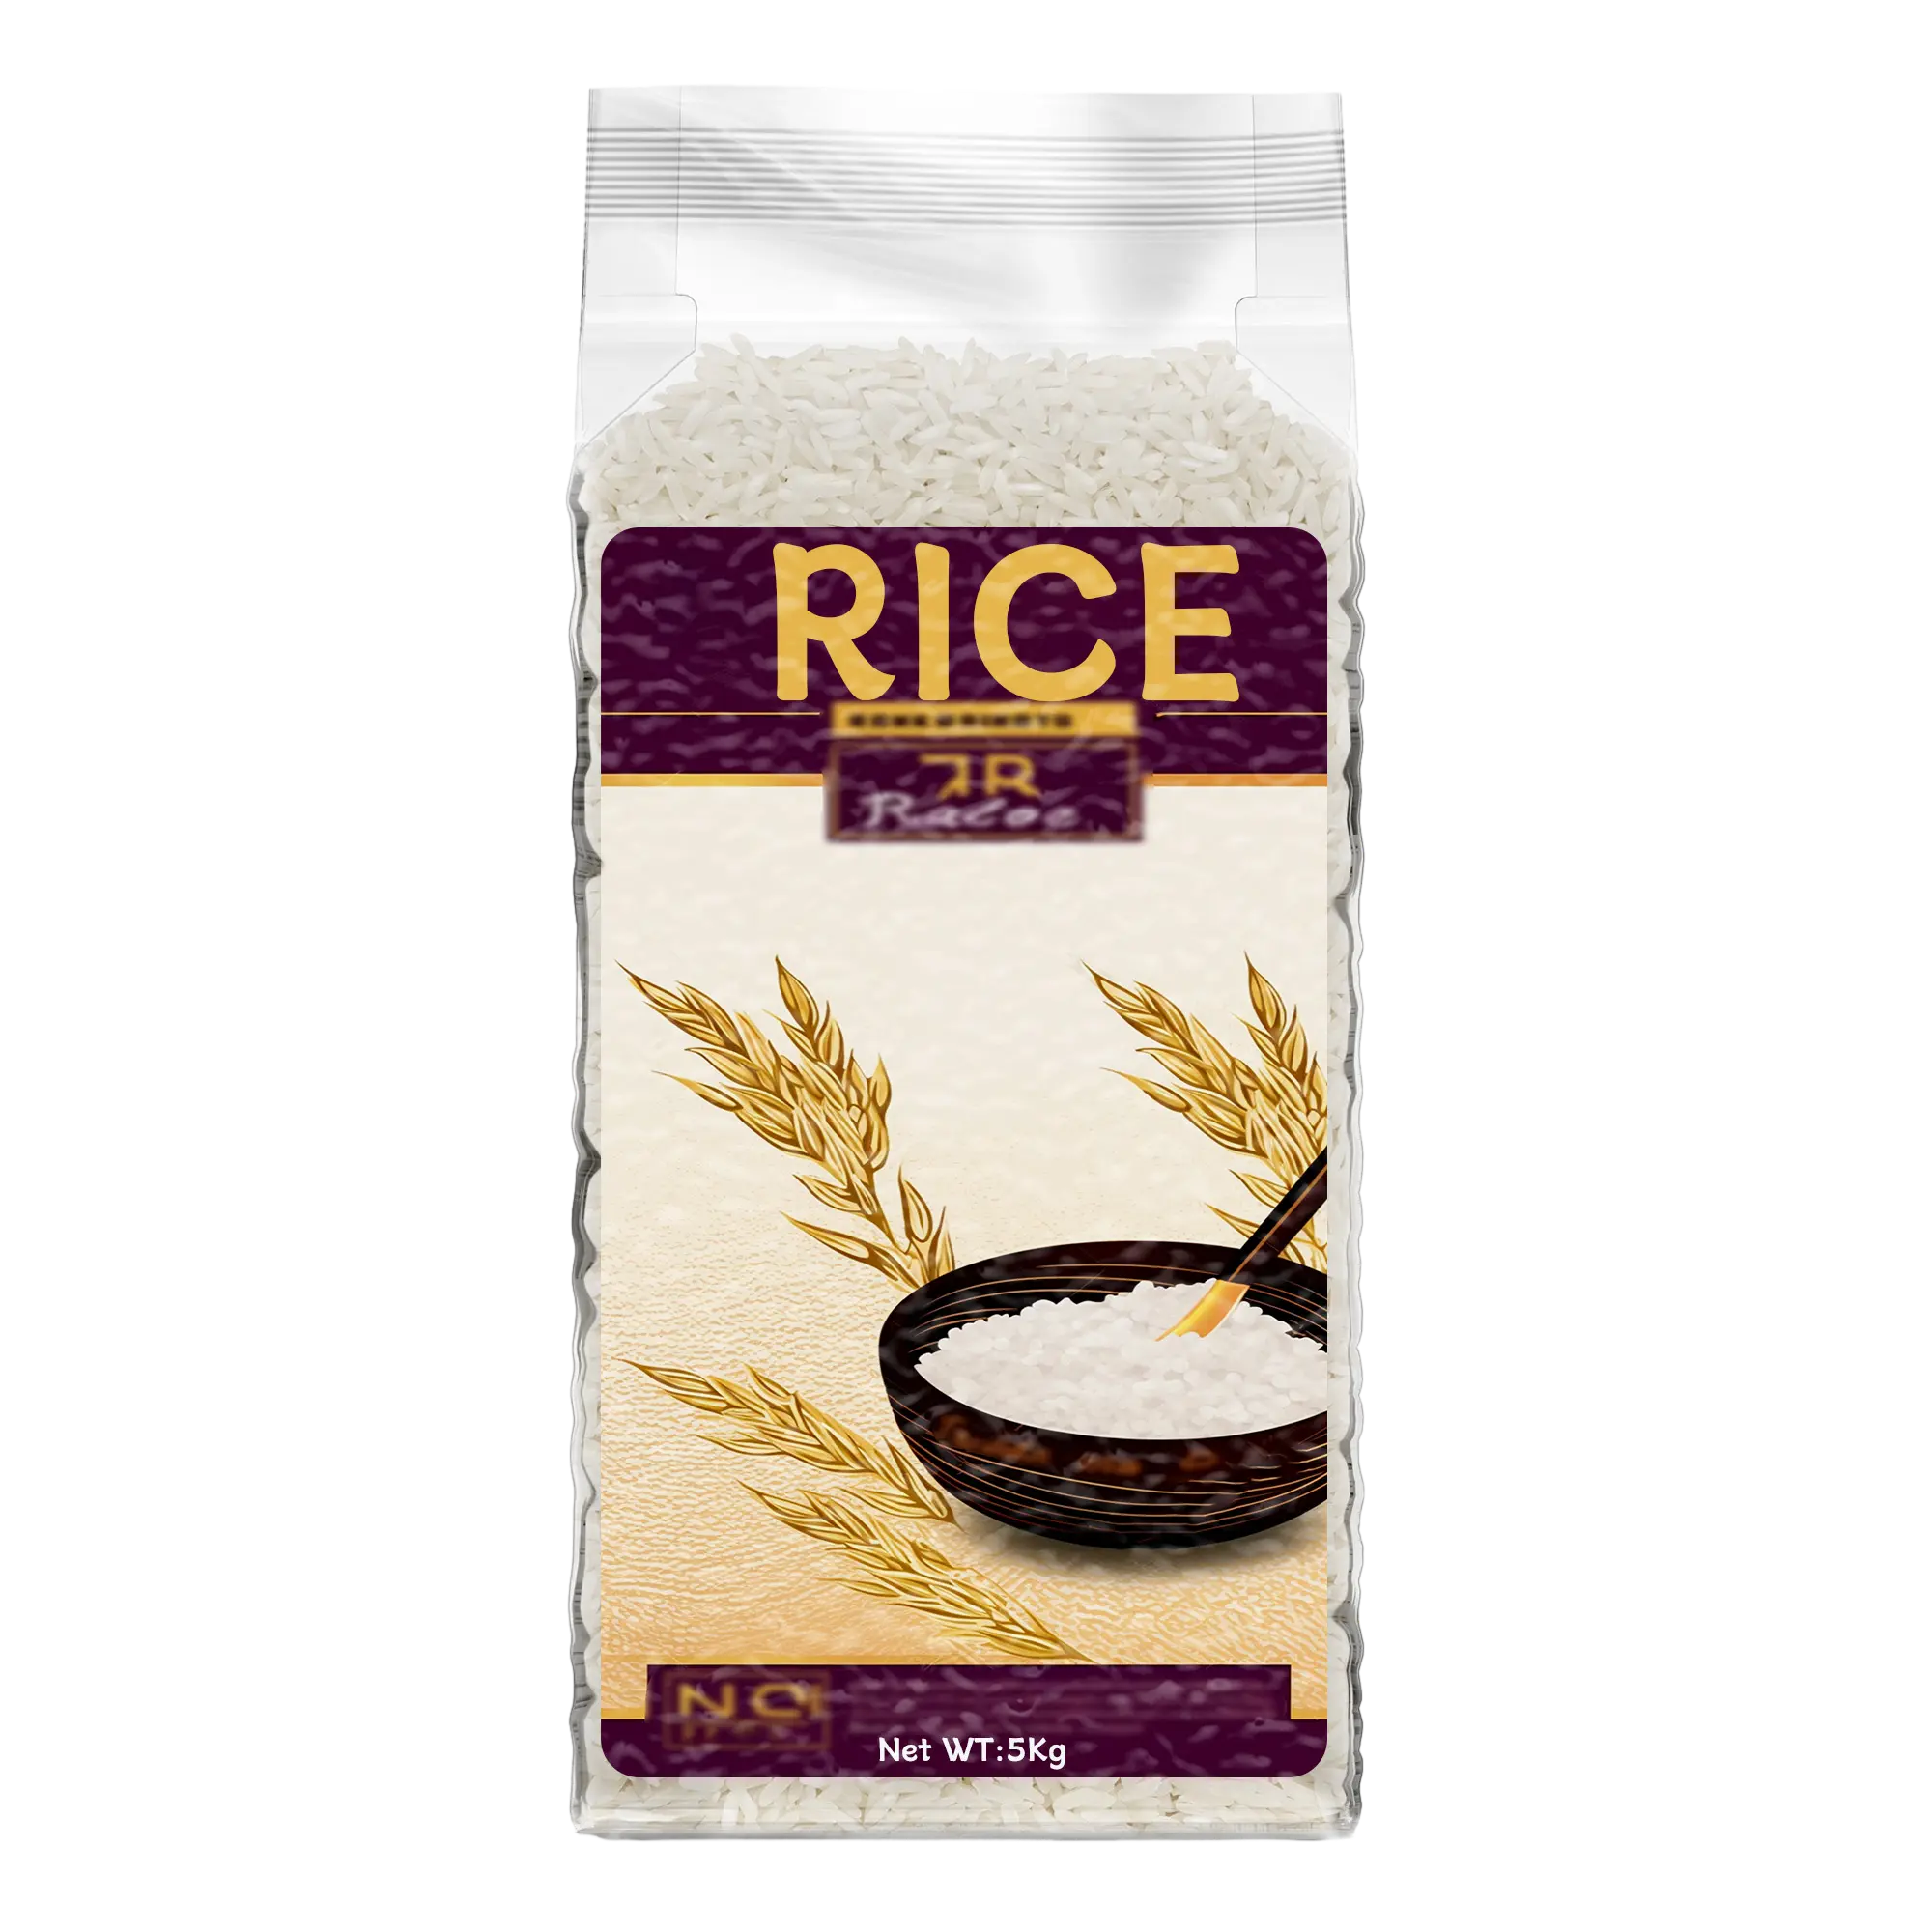 rice bags